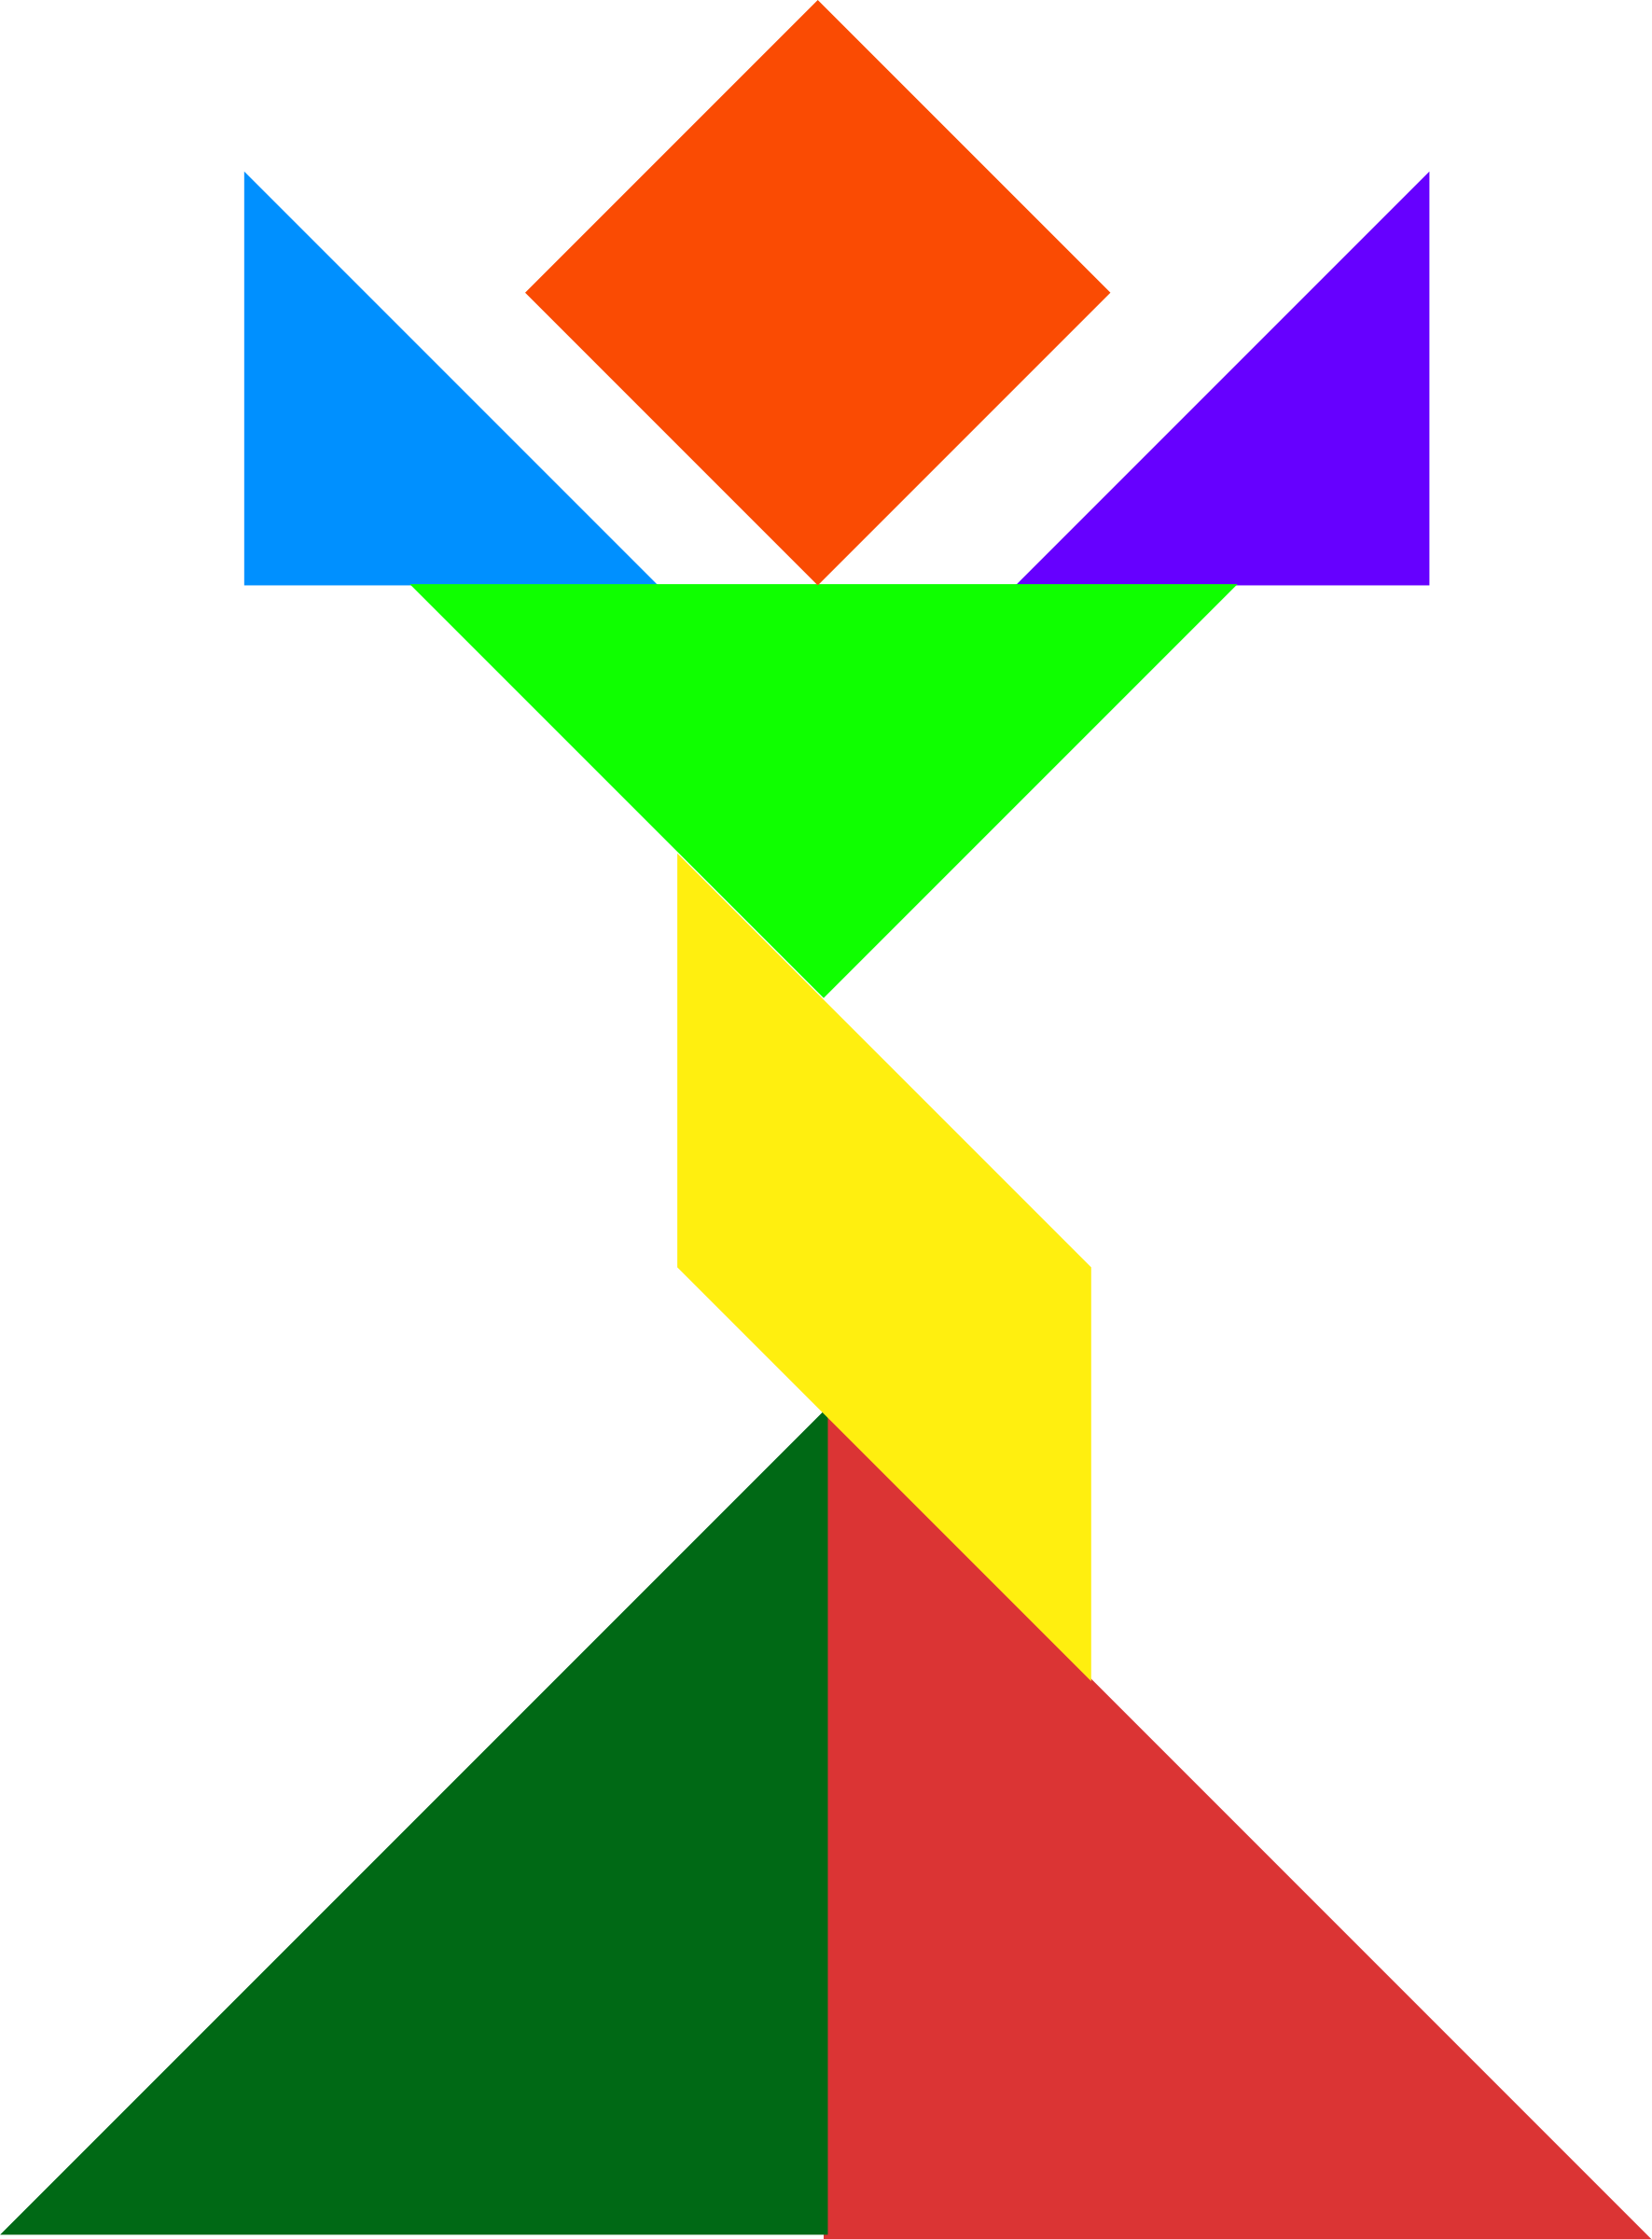 Tangram Puzzle Game Download - Flower Tangram Shapes (1771x2400)